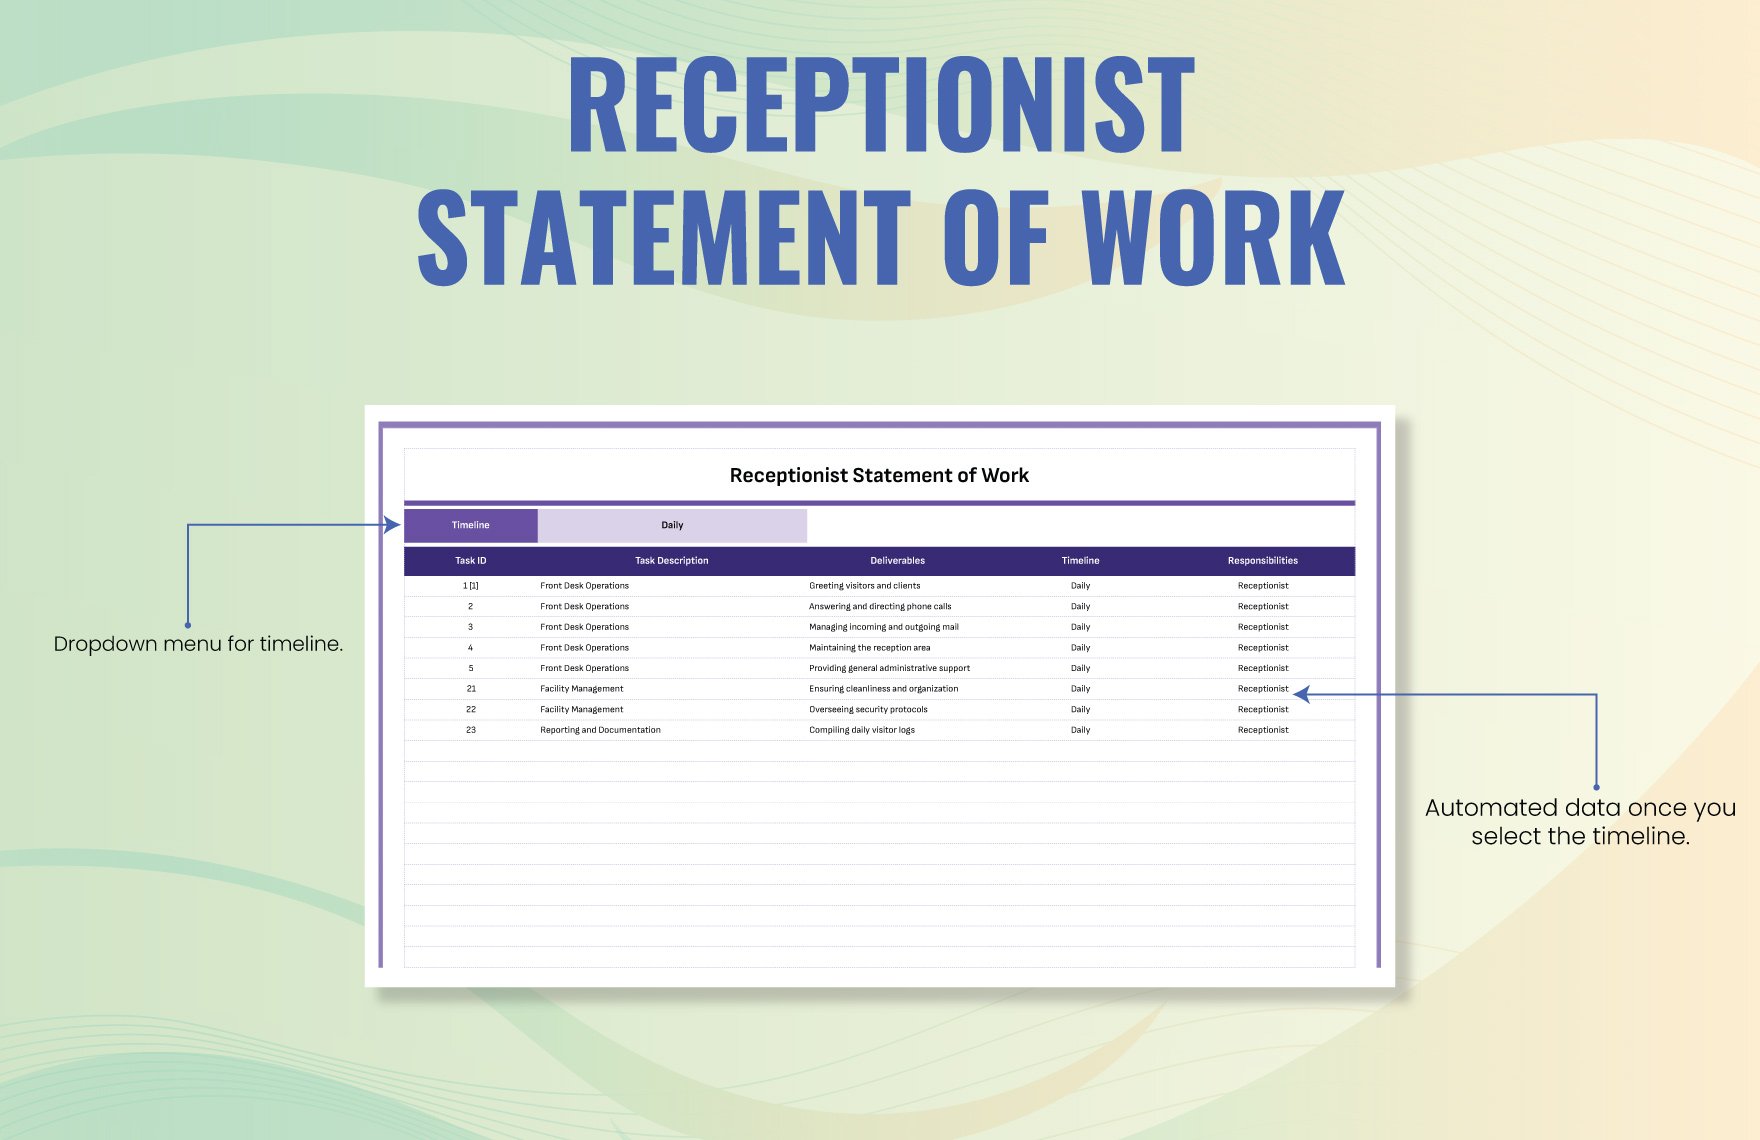 Receptionist Statement of Work Template